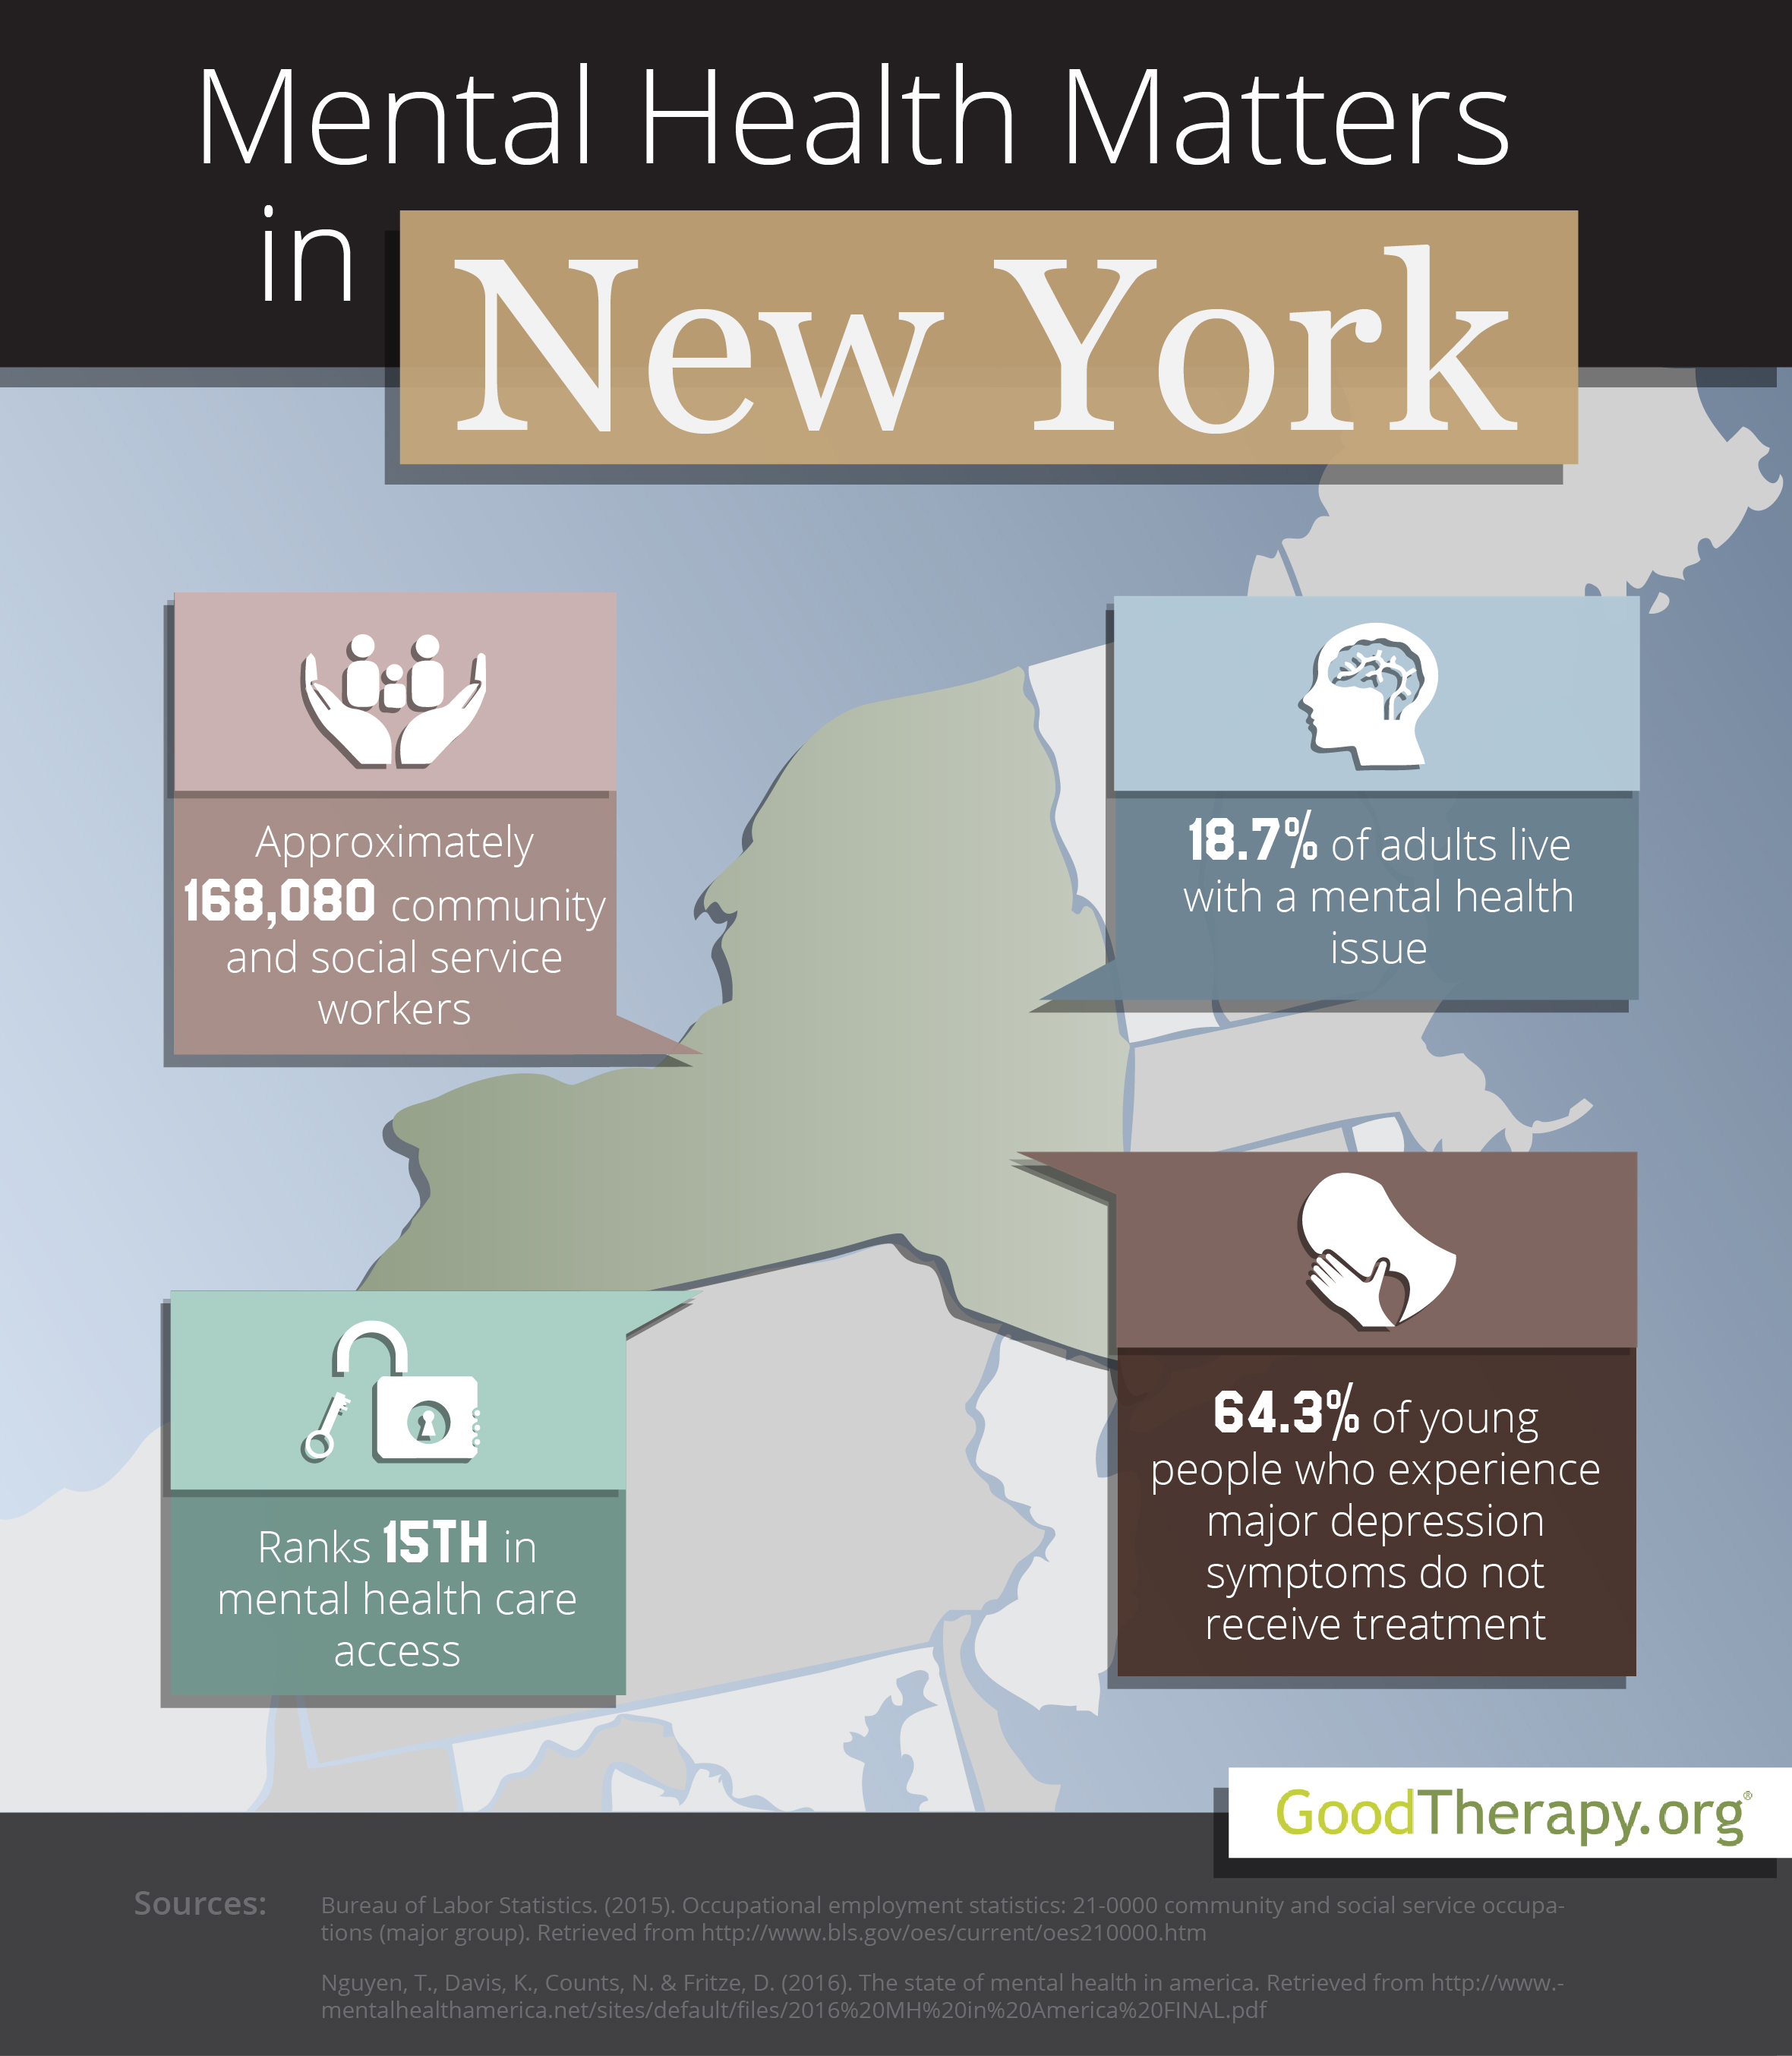 New York Mental Health Statistics